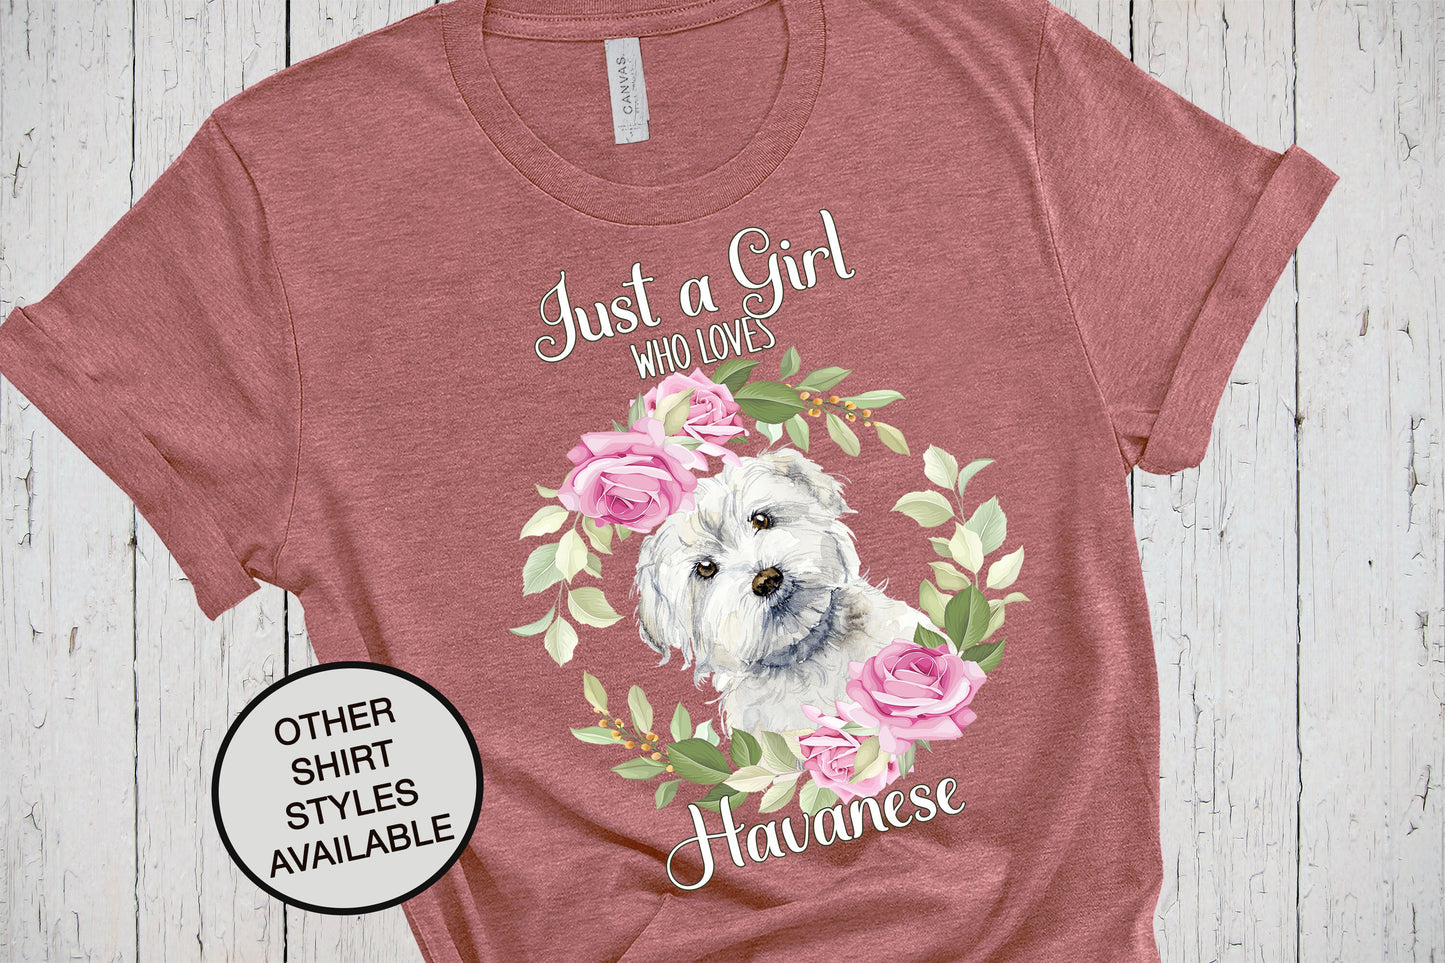 Just A Girl Who Loves Havanese, Dog Mama Shirt, Havanese Mom, Havanese Dog Gifts, Gift for Groomer, Dog Walker Tshirt, Fur Mama, Havi Tshirt